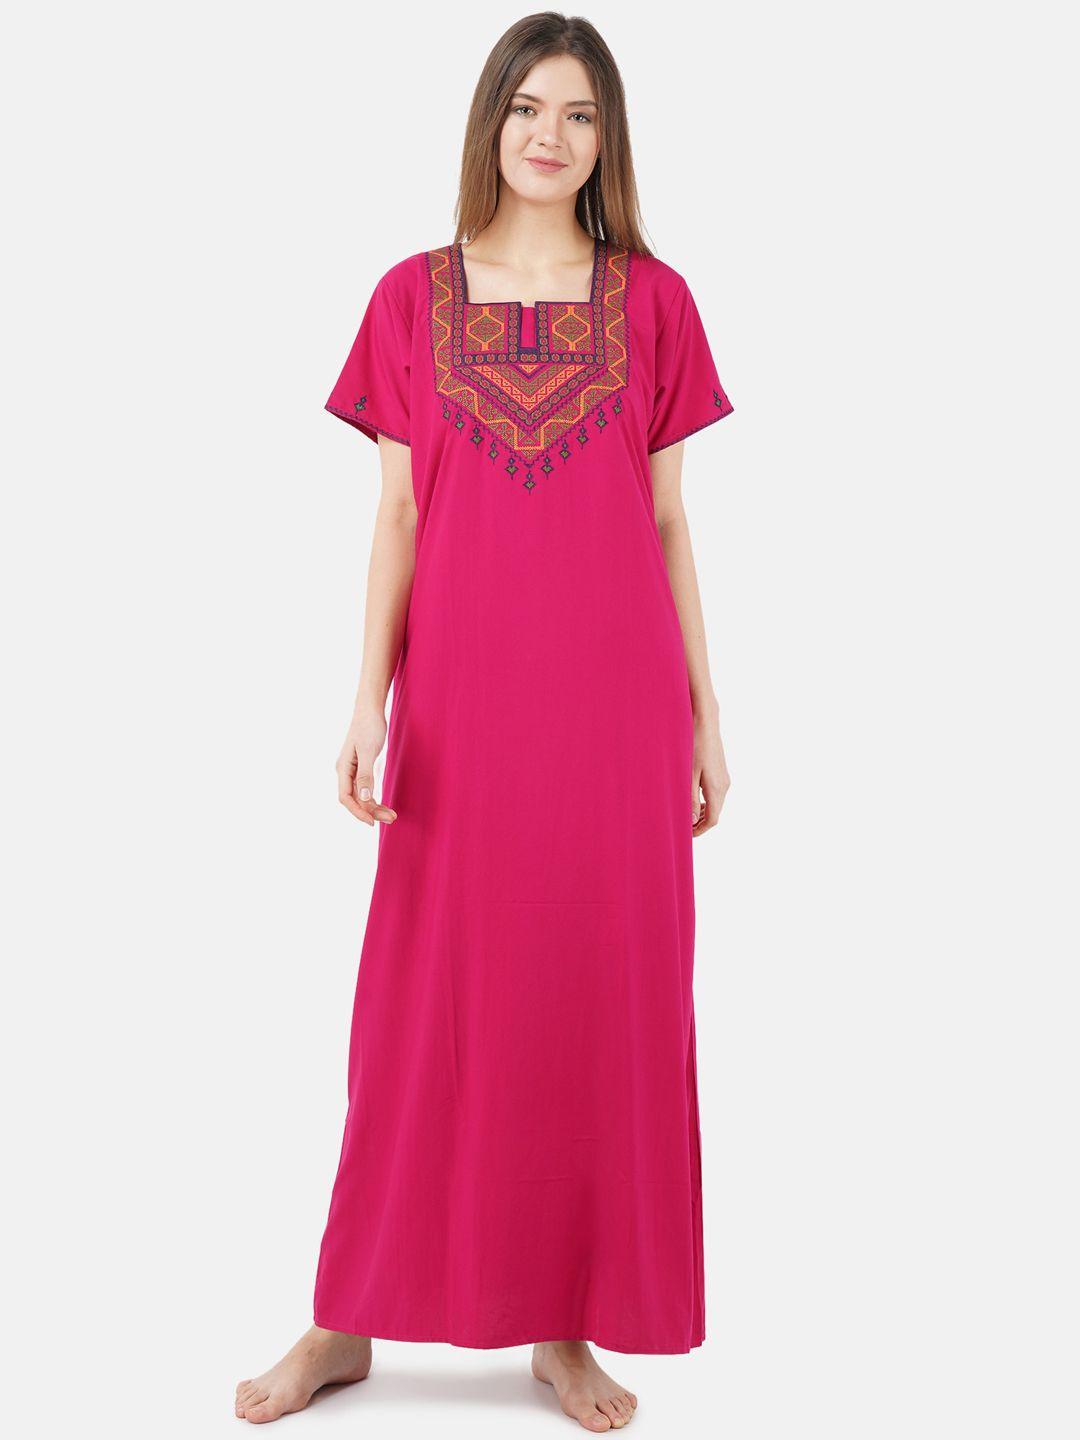 koi sleepwear woman pink embroidered maxi nightdress